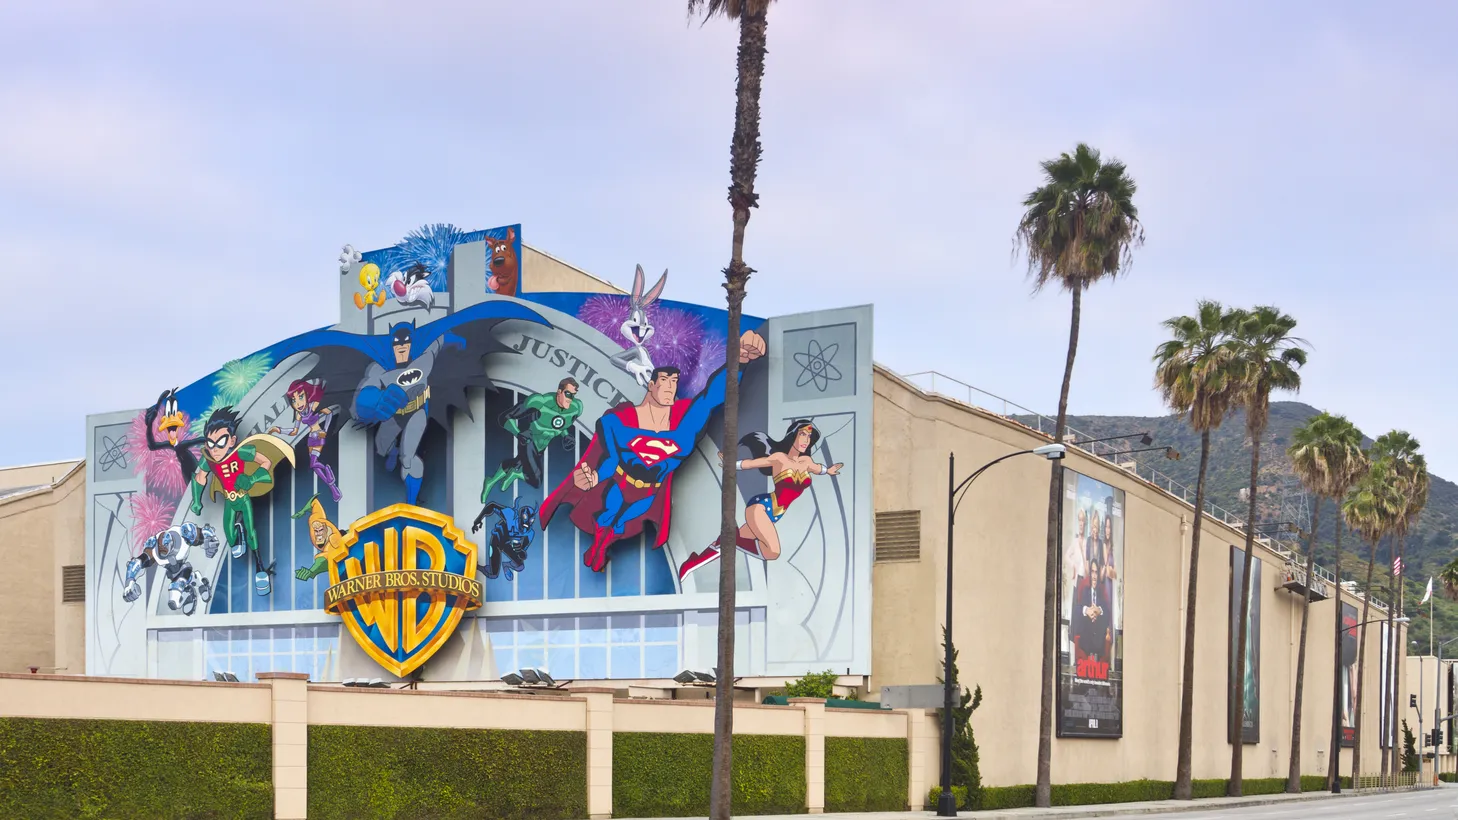 The Warner Bros. film division, based in Burbank, sees big leadership changes under new CEO David Zaslav.